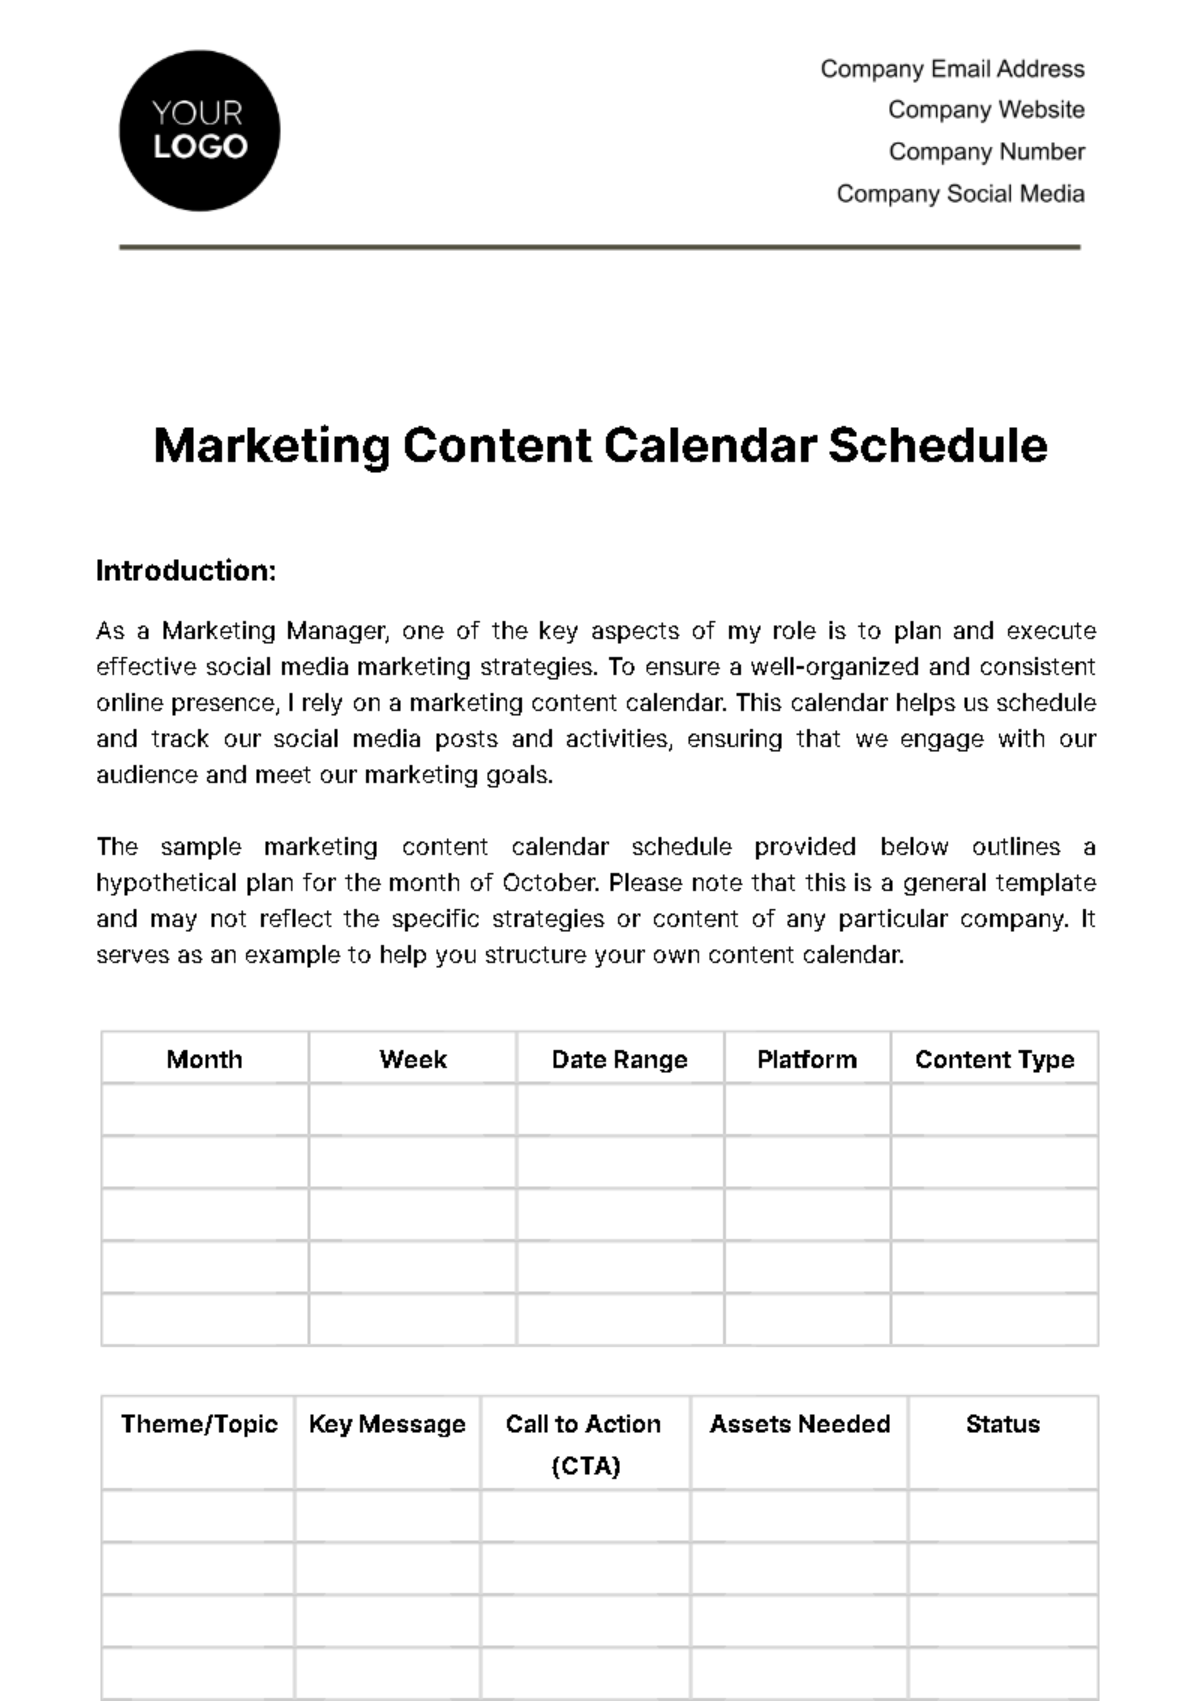 Marketing Content Calendar Schedule Template